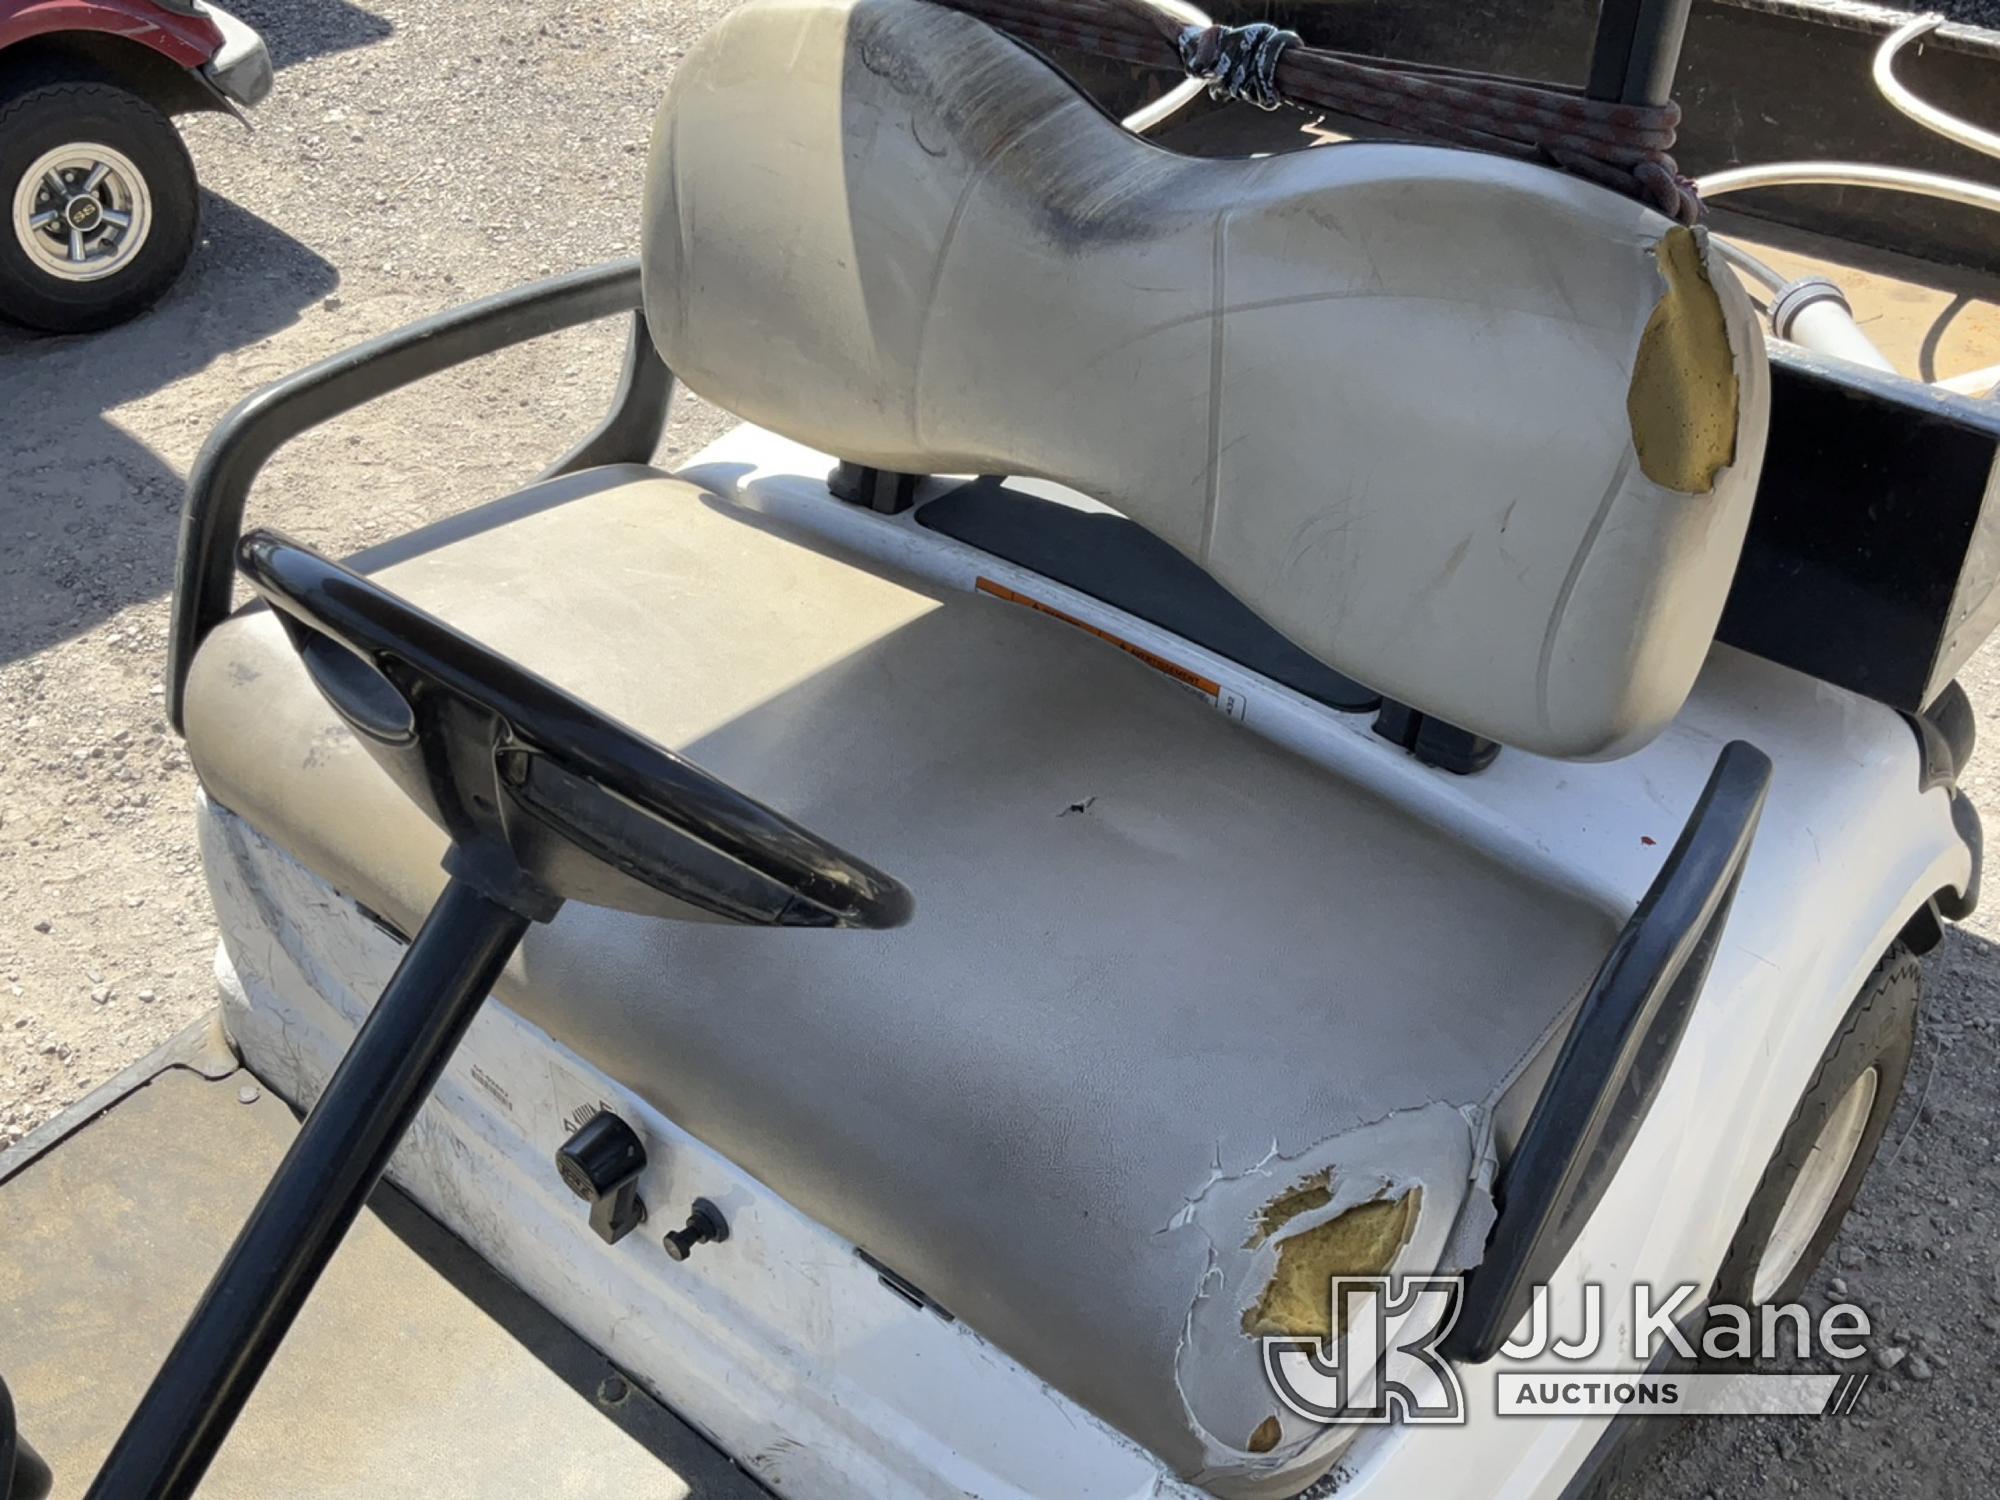 (Jurupa Valley, CA) 2011 Yamaha Golf Cart Not Running , No Key, Missing Parts